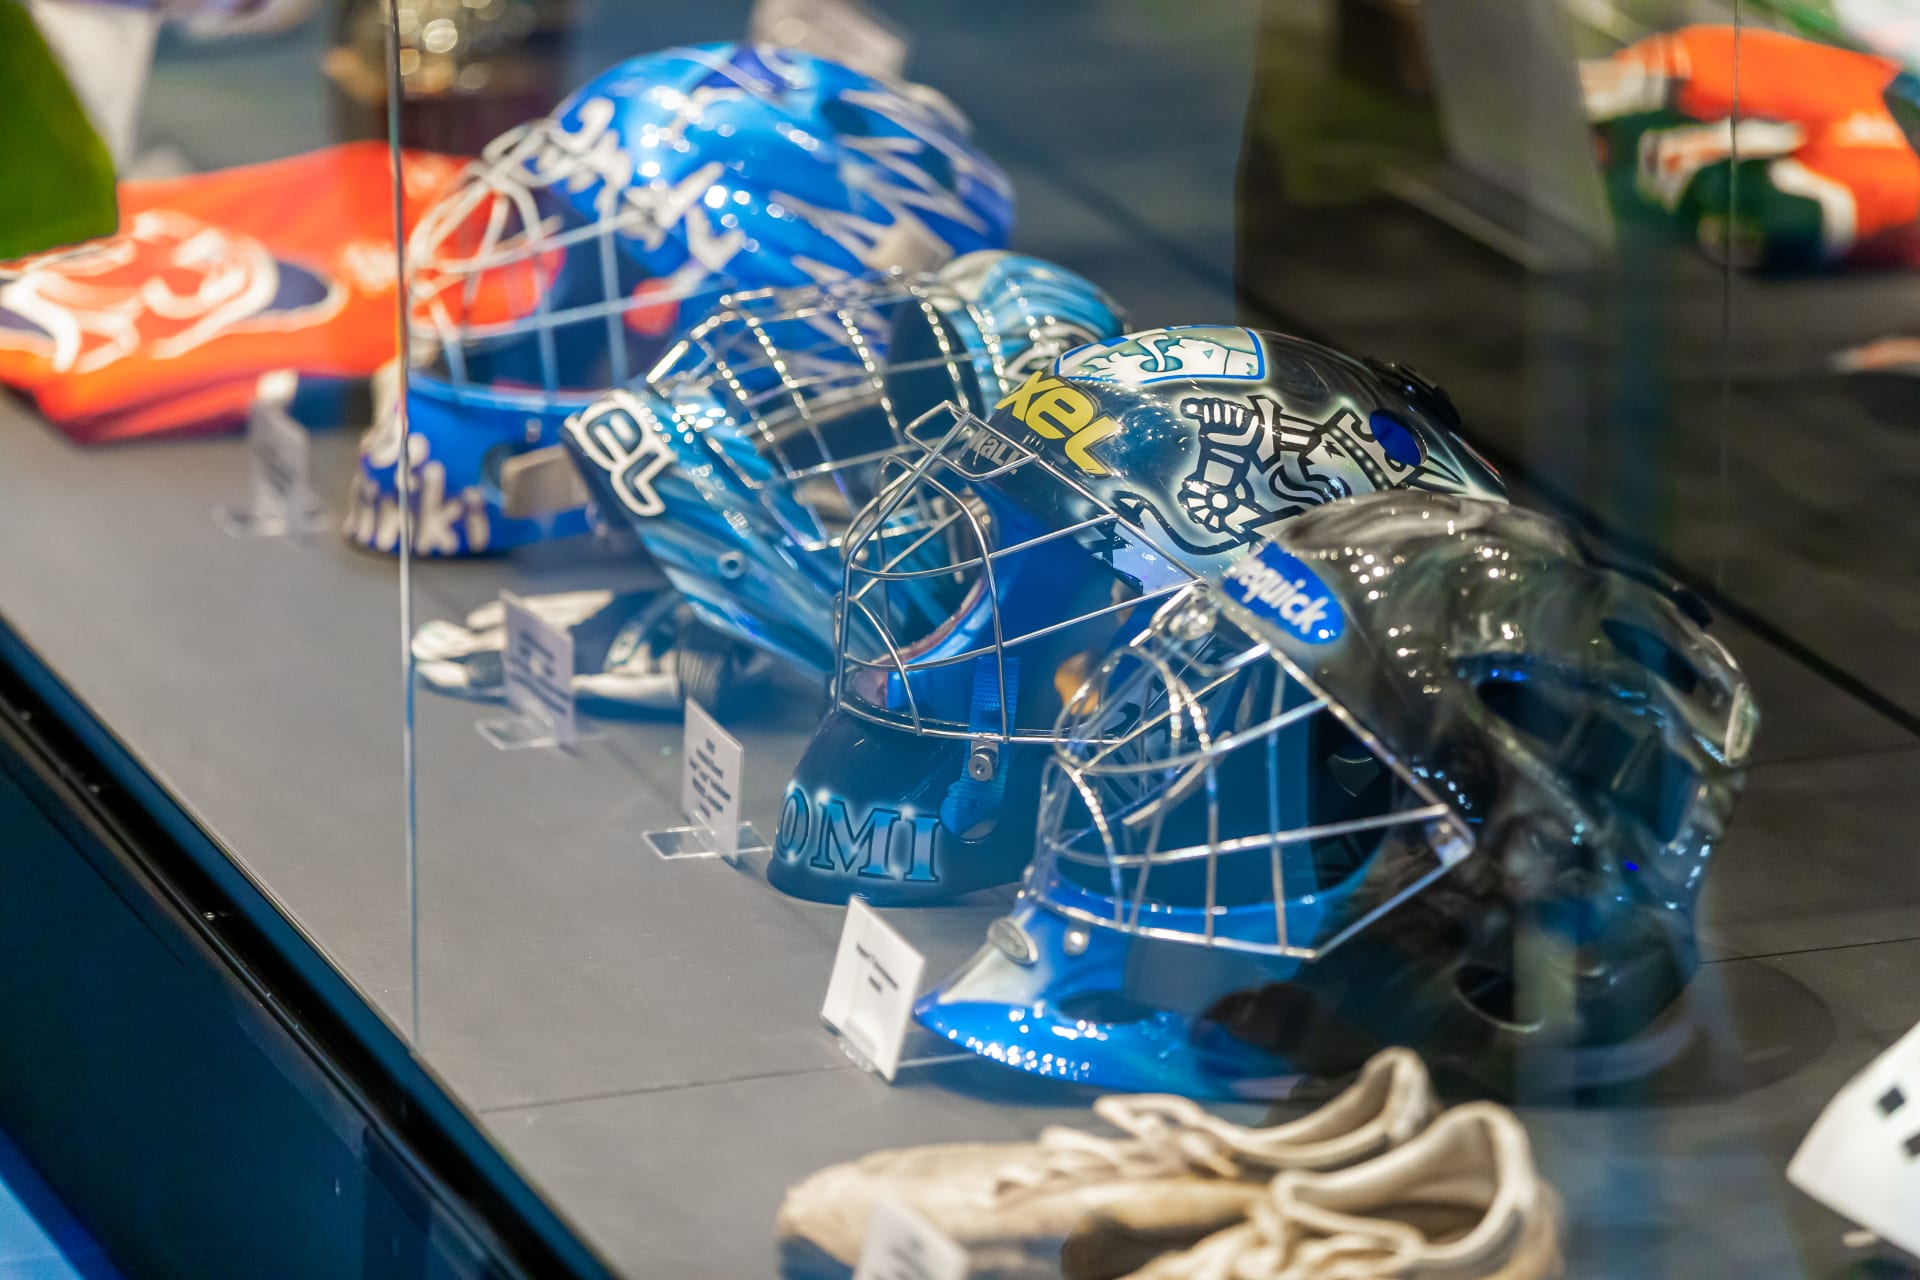 The evolution of floorball helmets can be seen in Floorball Museum.